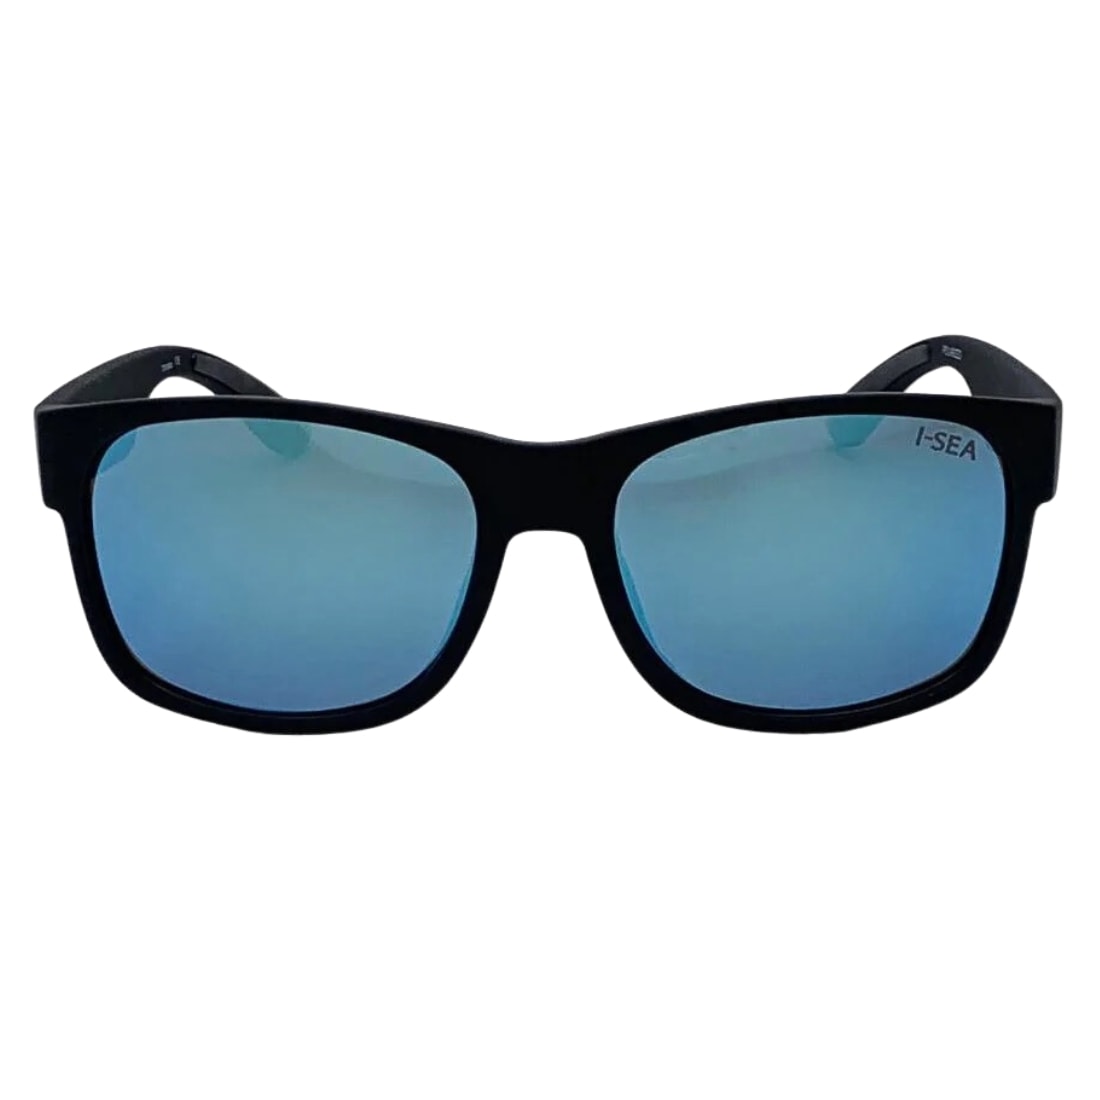 I-Sea Seven Seas Polarised Sunglasses - Black Rubber/Ice Blue Mirror Polarized Lens - Square/Rectangular Sunglasses by I-Sea